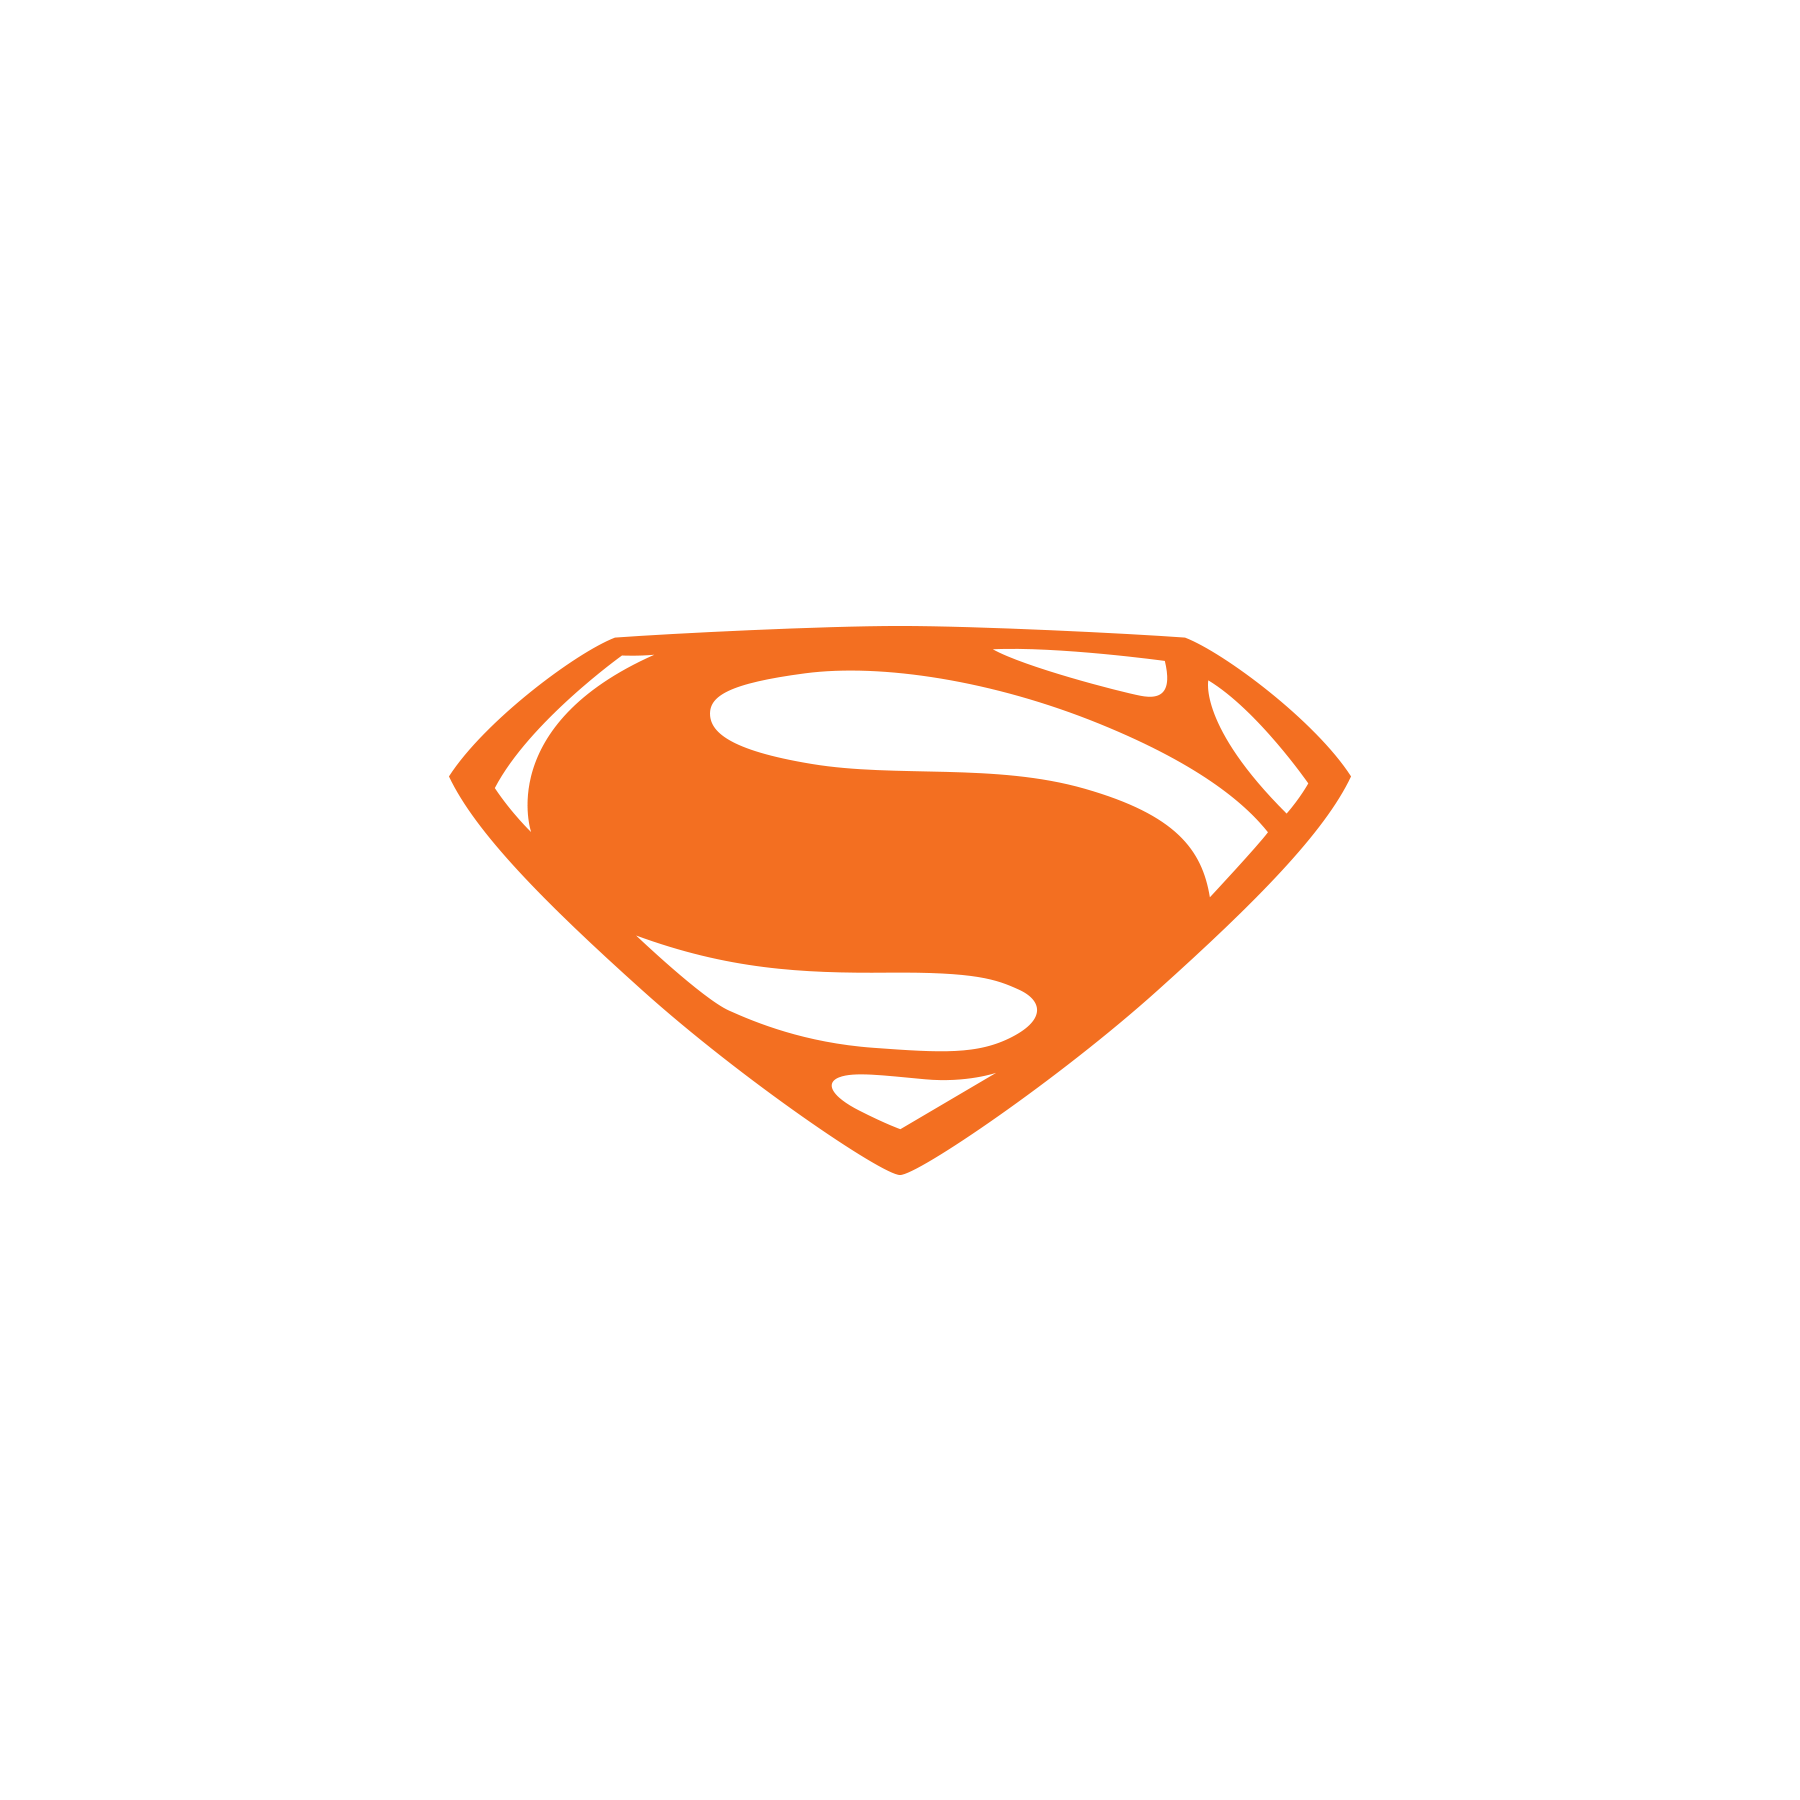 Superman Man Of Steel 3D Silver Emblem 03 by KingTracy on DeviantArt